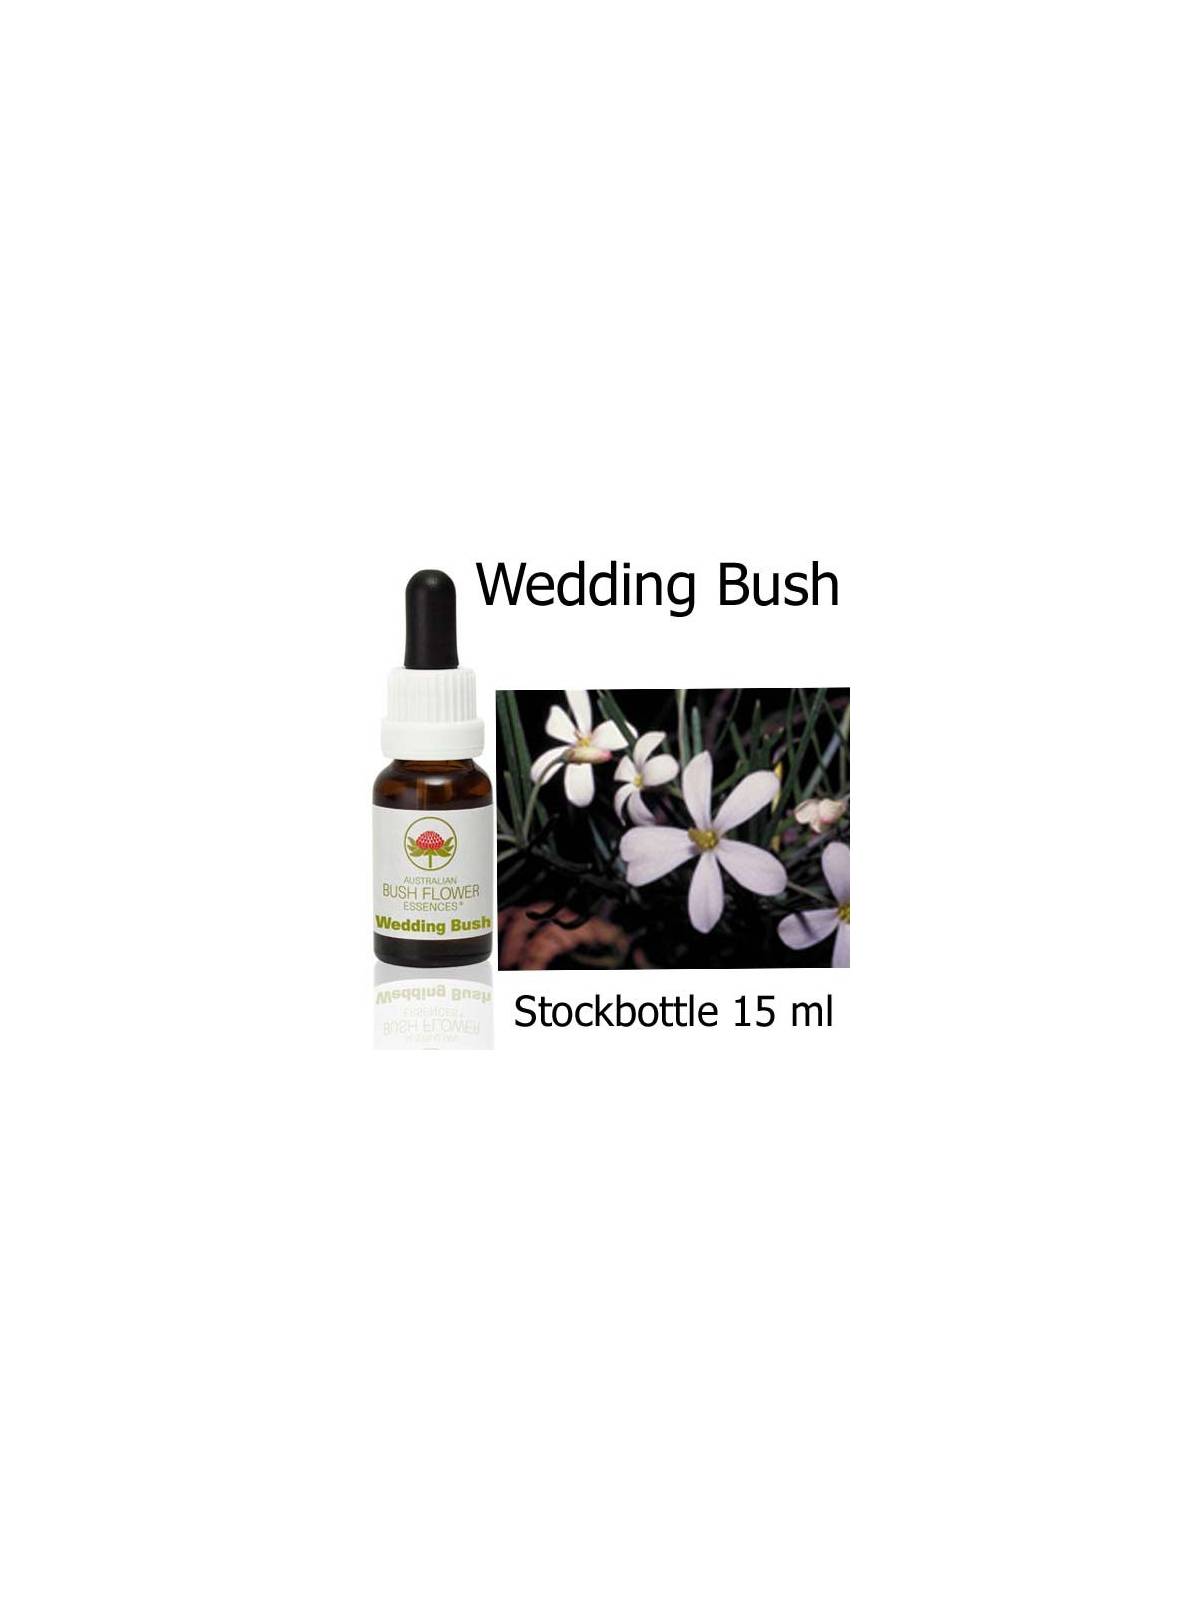 Wedding Bush Australian Bush Flower Essences stockbottles